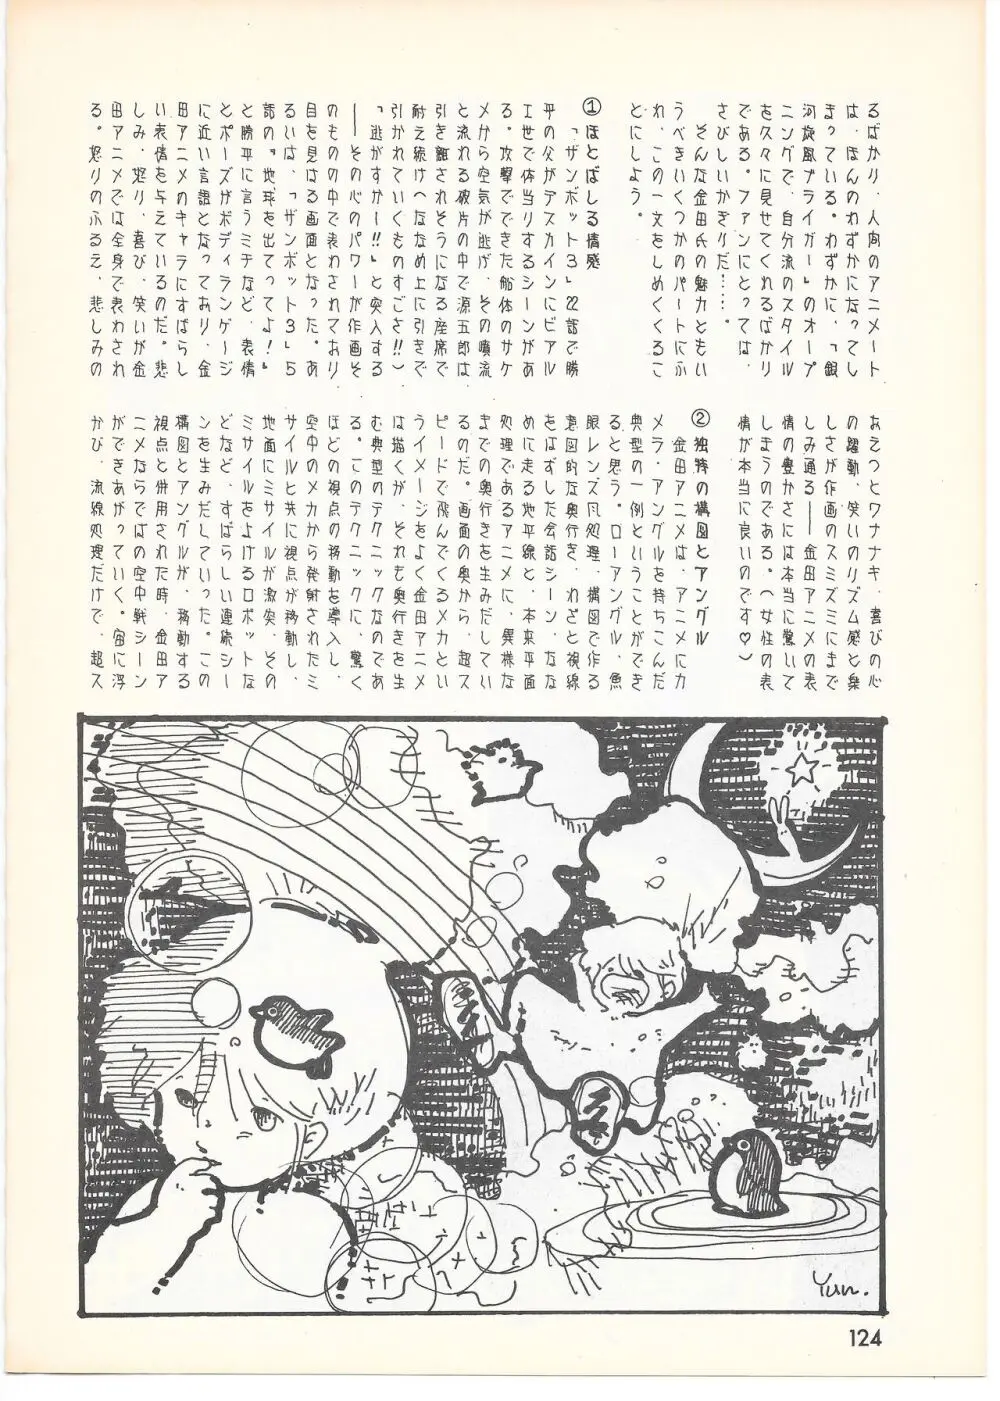 THE ANIMATOR 1 金田伊功特集号 - page119